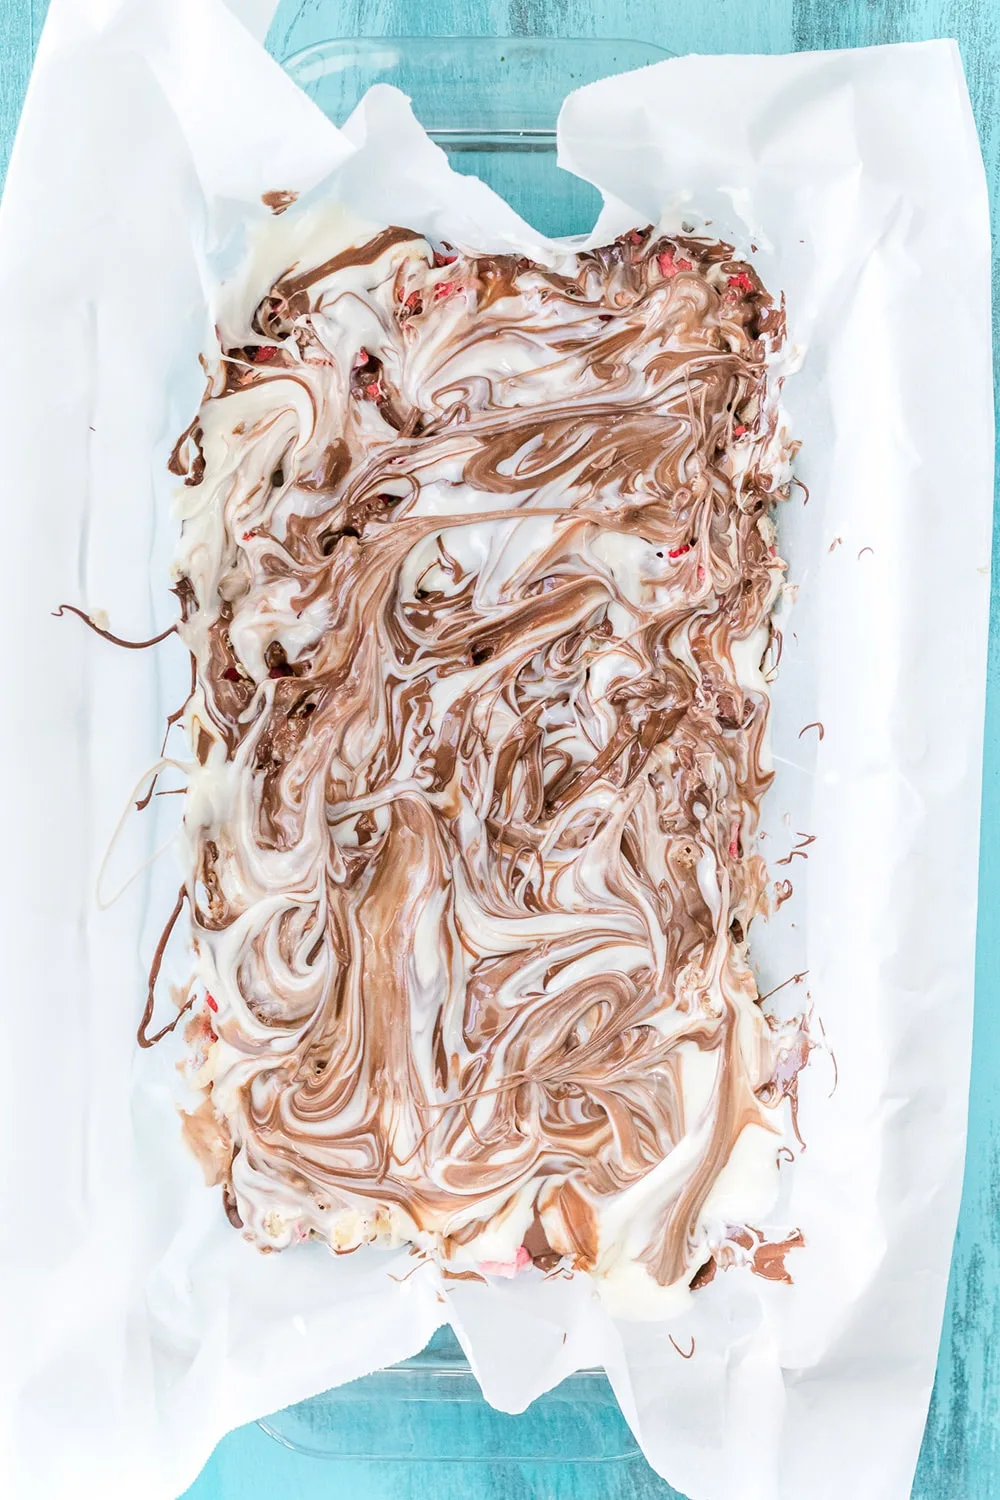 White and milk chocolate swirled together.